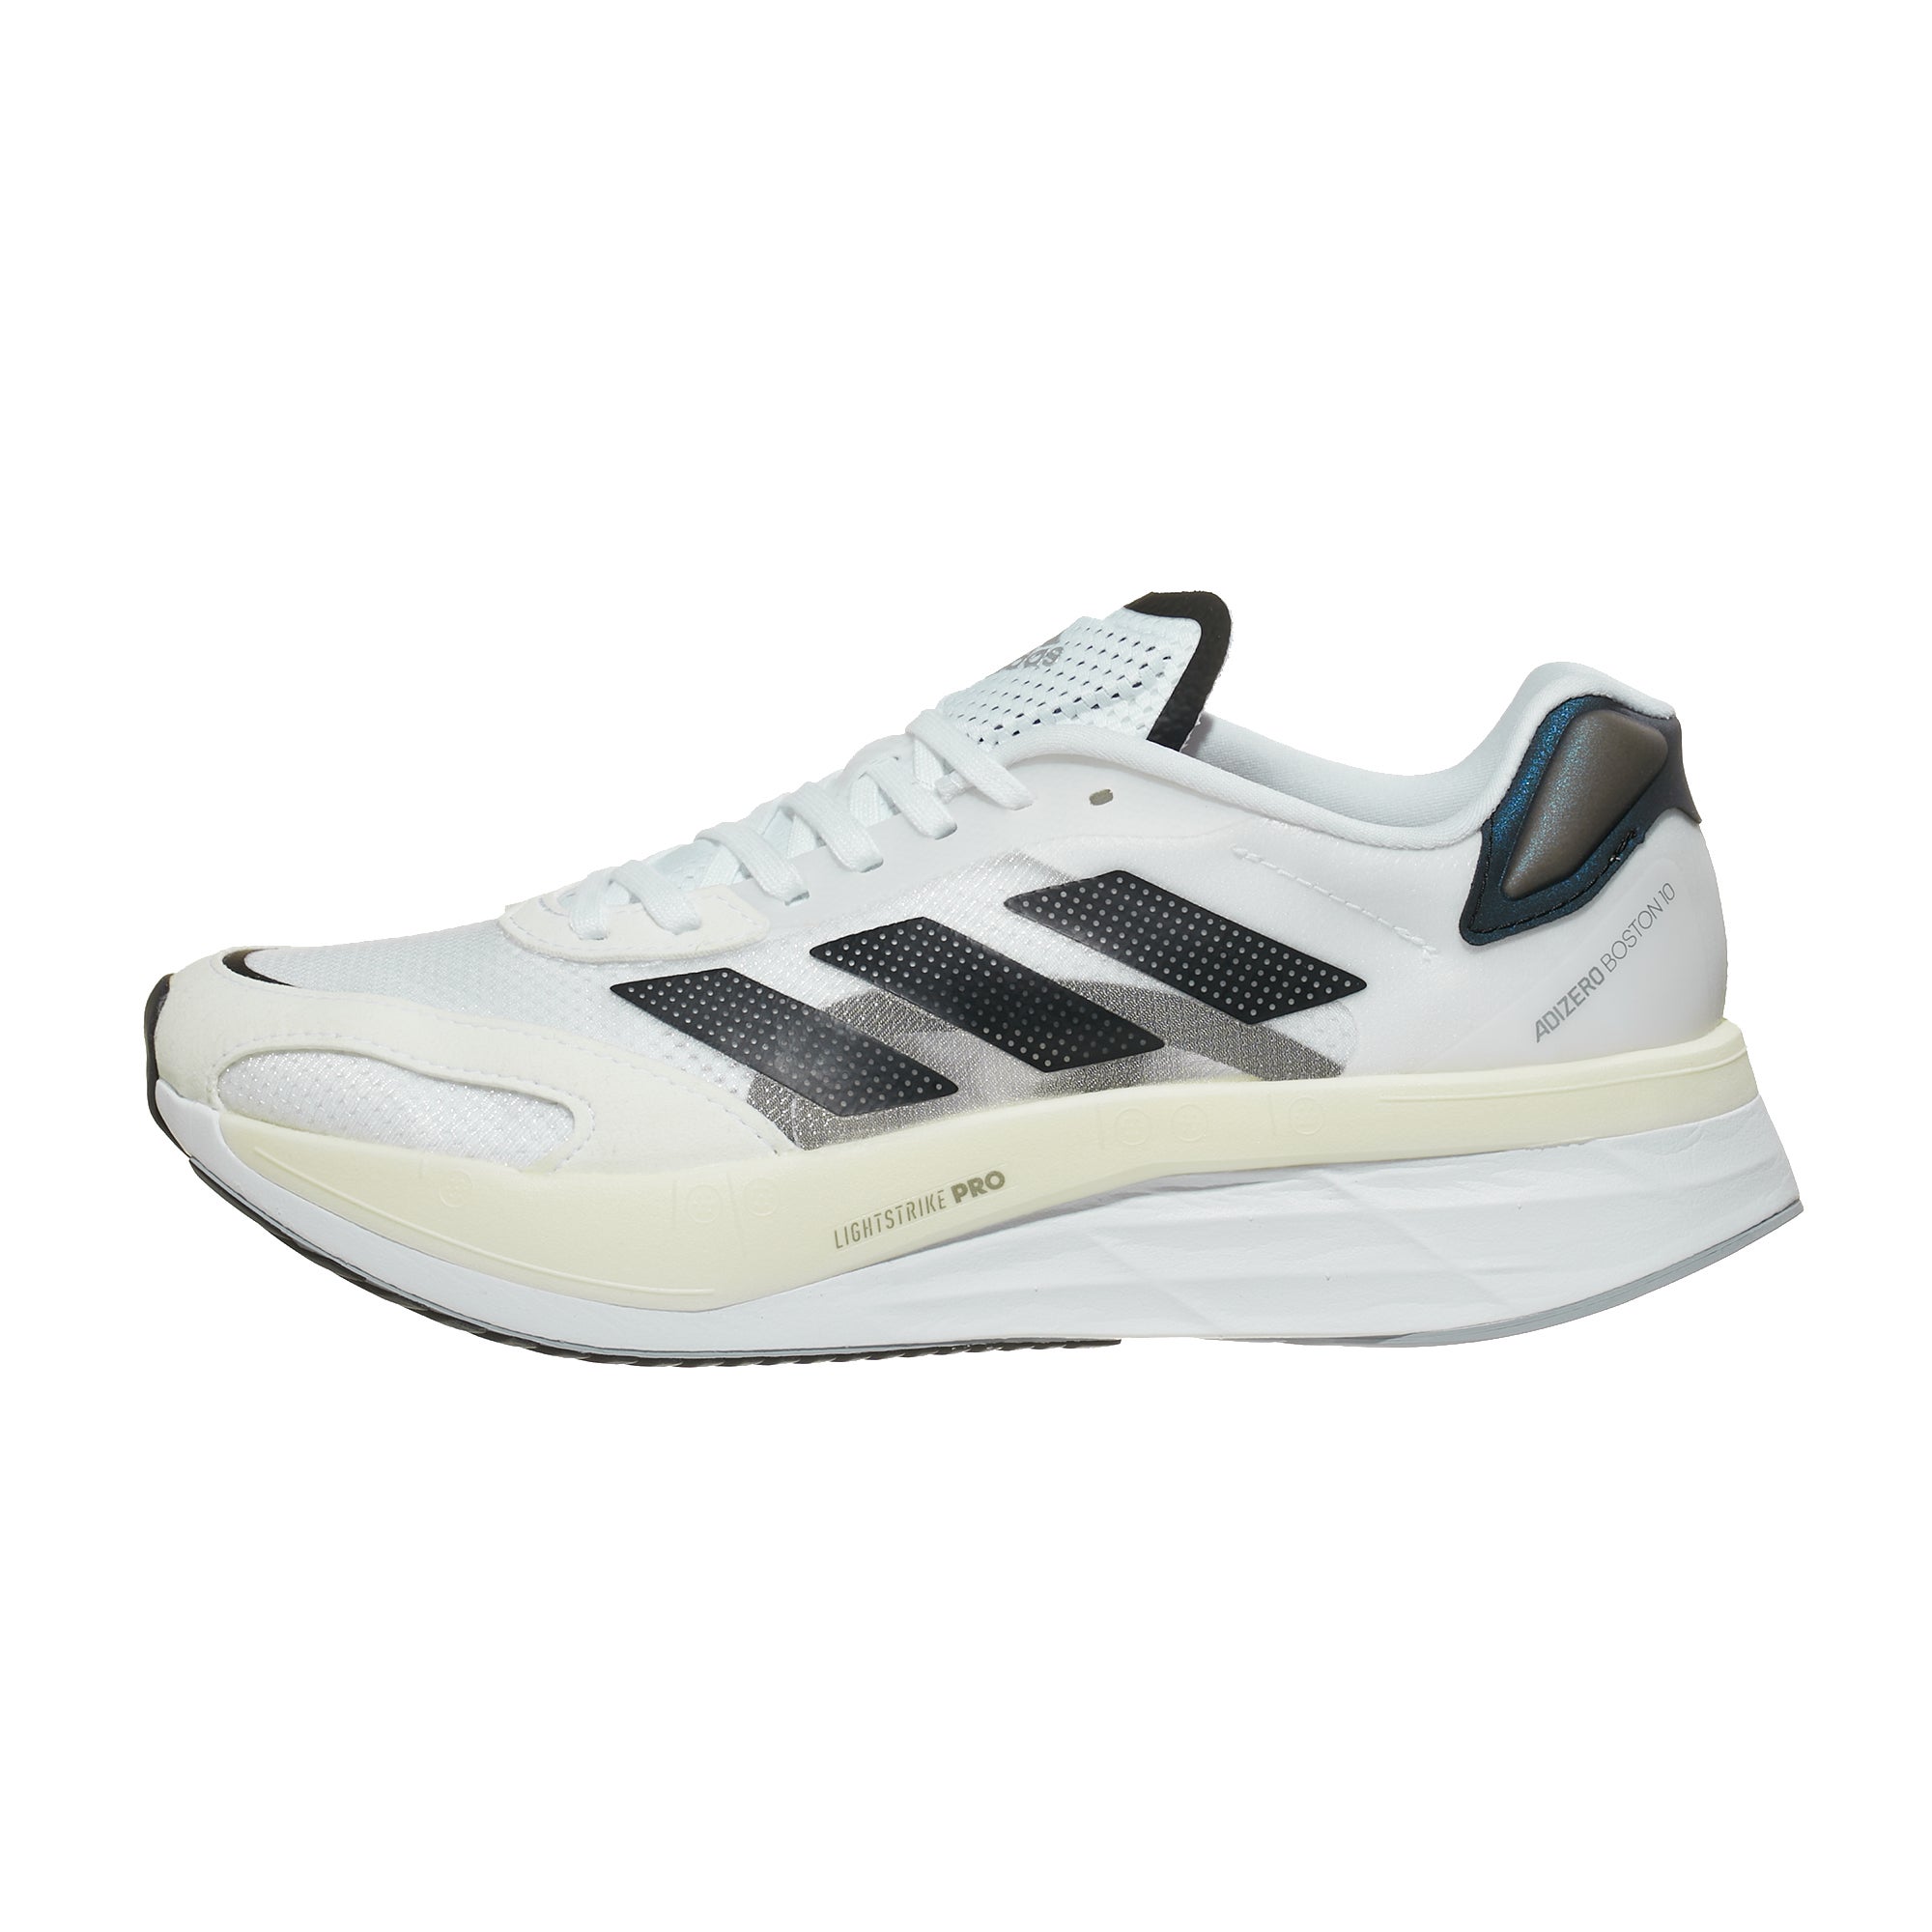 adidas adizero Boston 10 Men's Shoes White/Black 360° View | Running ...